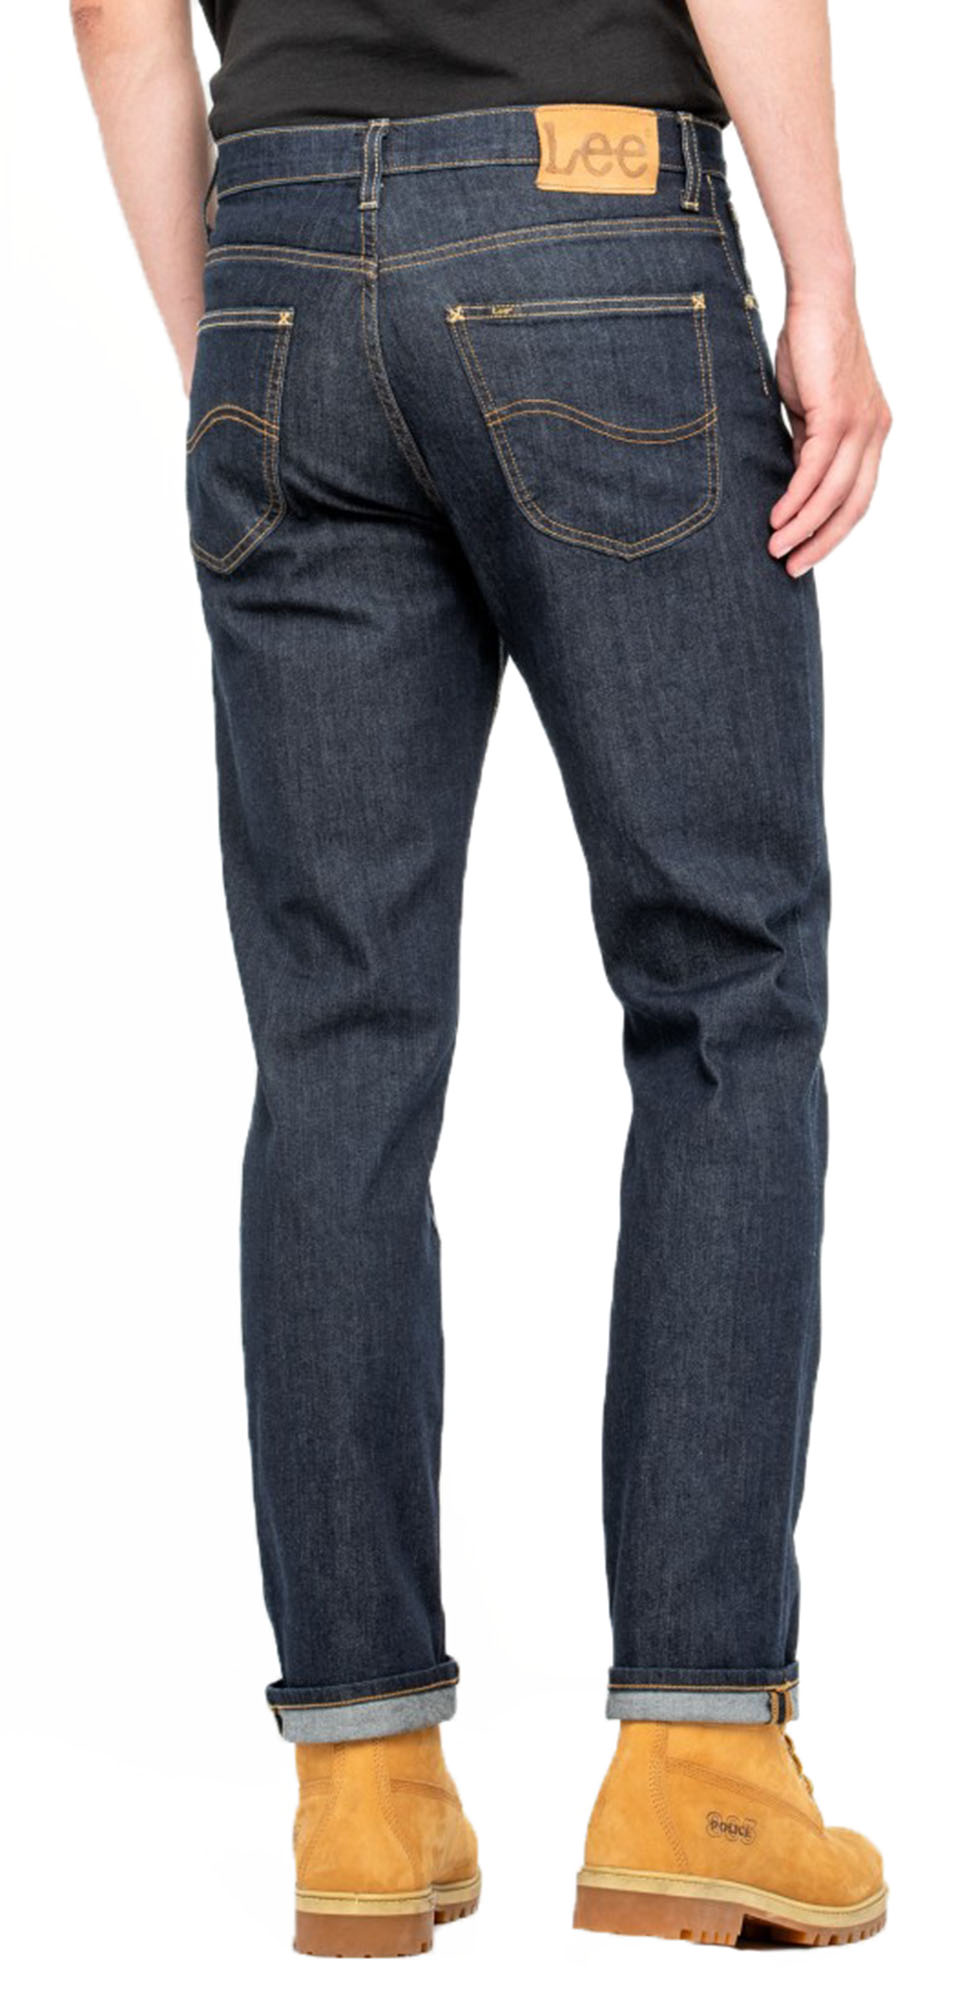 Lee Brooklyn New Men's Stretch Jeans Straight Leg Dark Rinse Blue Faded ...